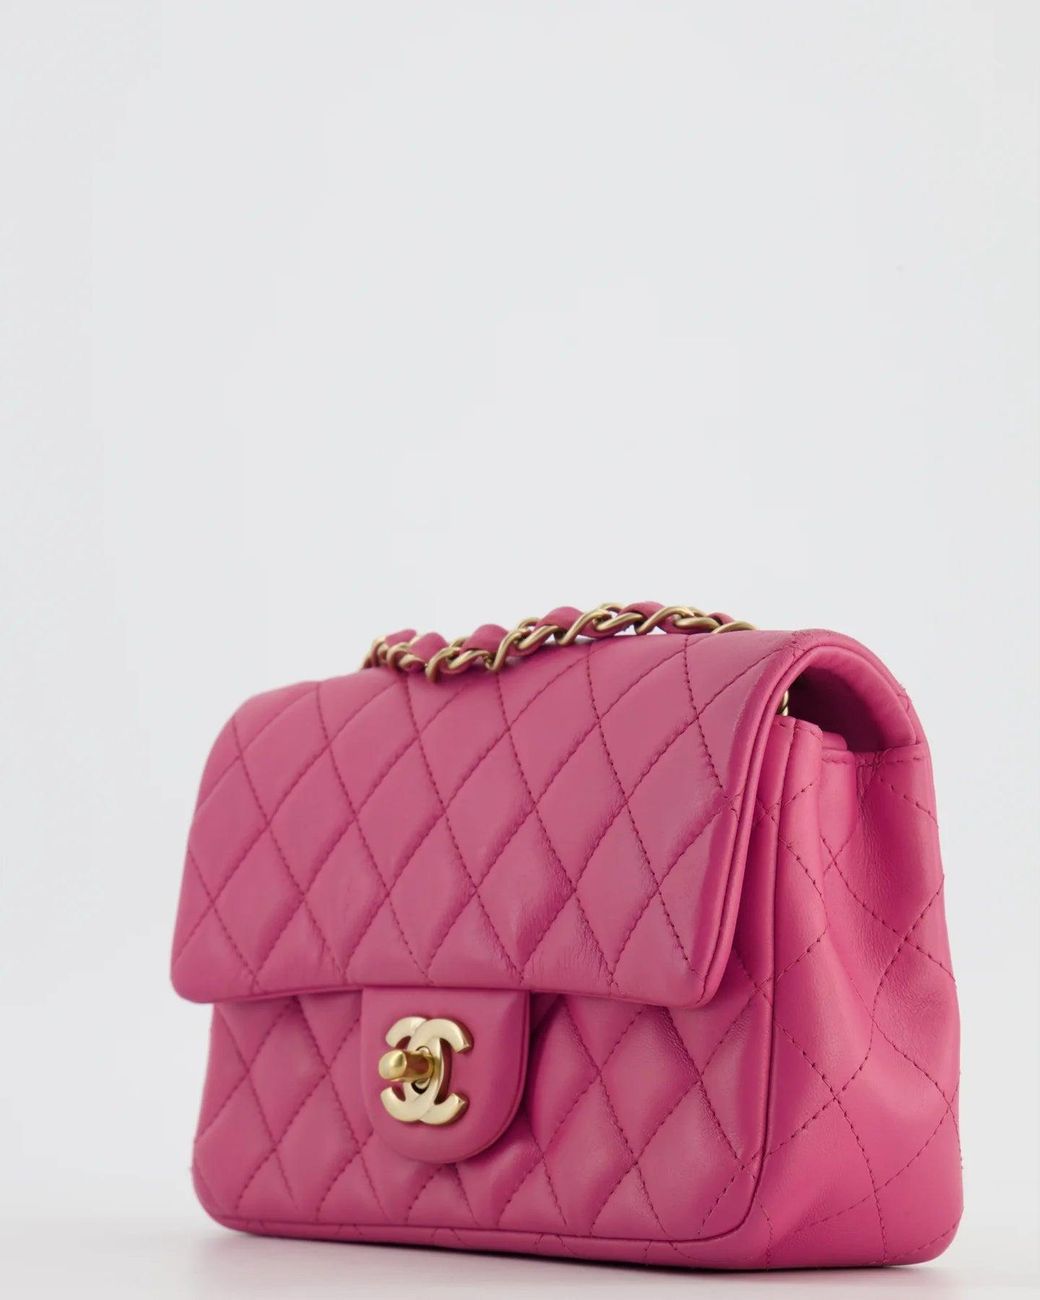 crossbody chanel quilted purse handbag